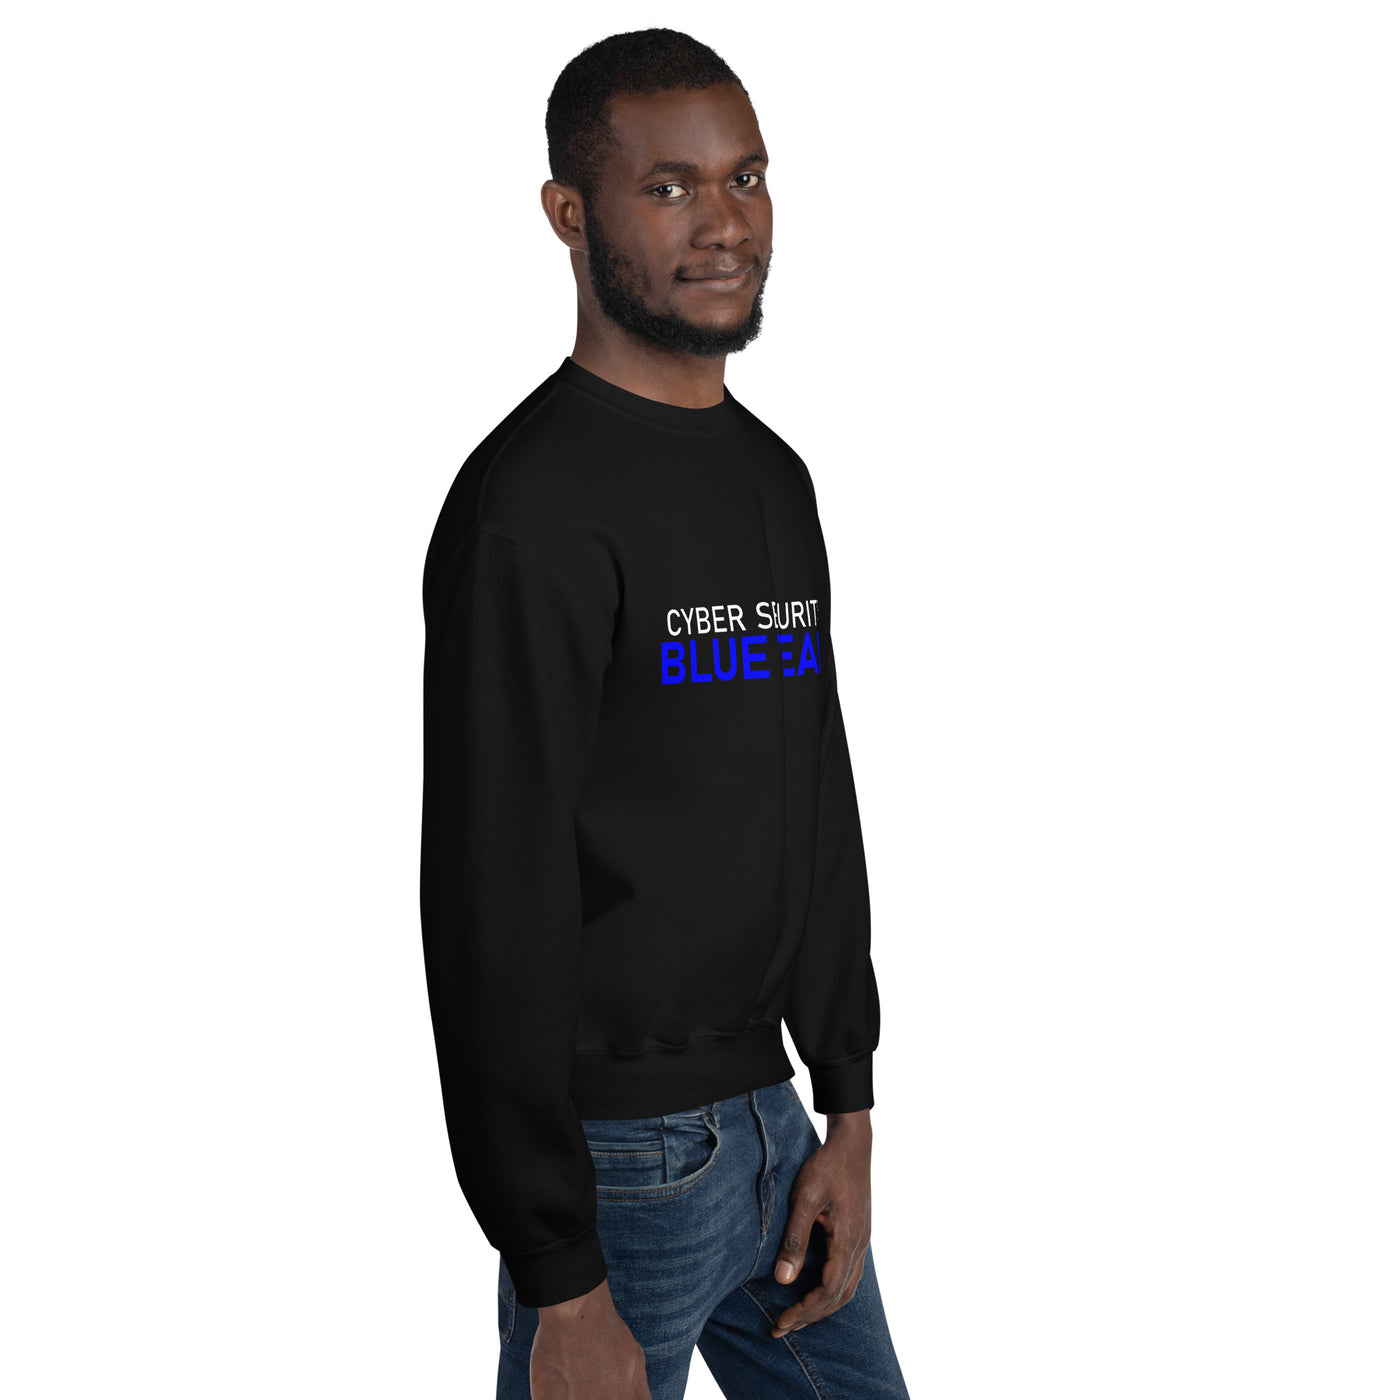 Cyber Security Blue team V4 - Unisex Sweatshirt